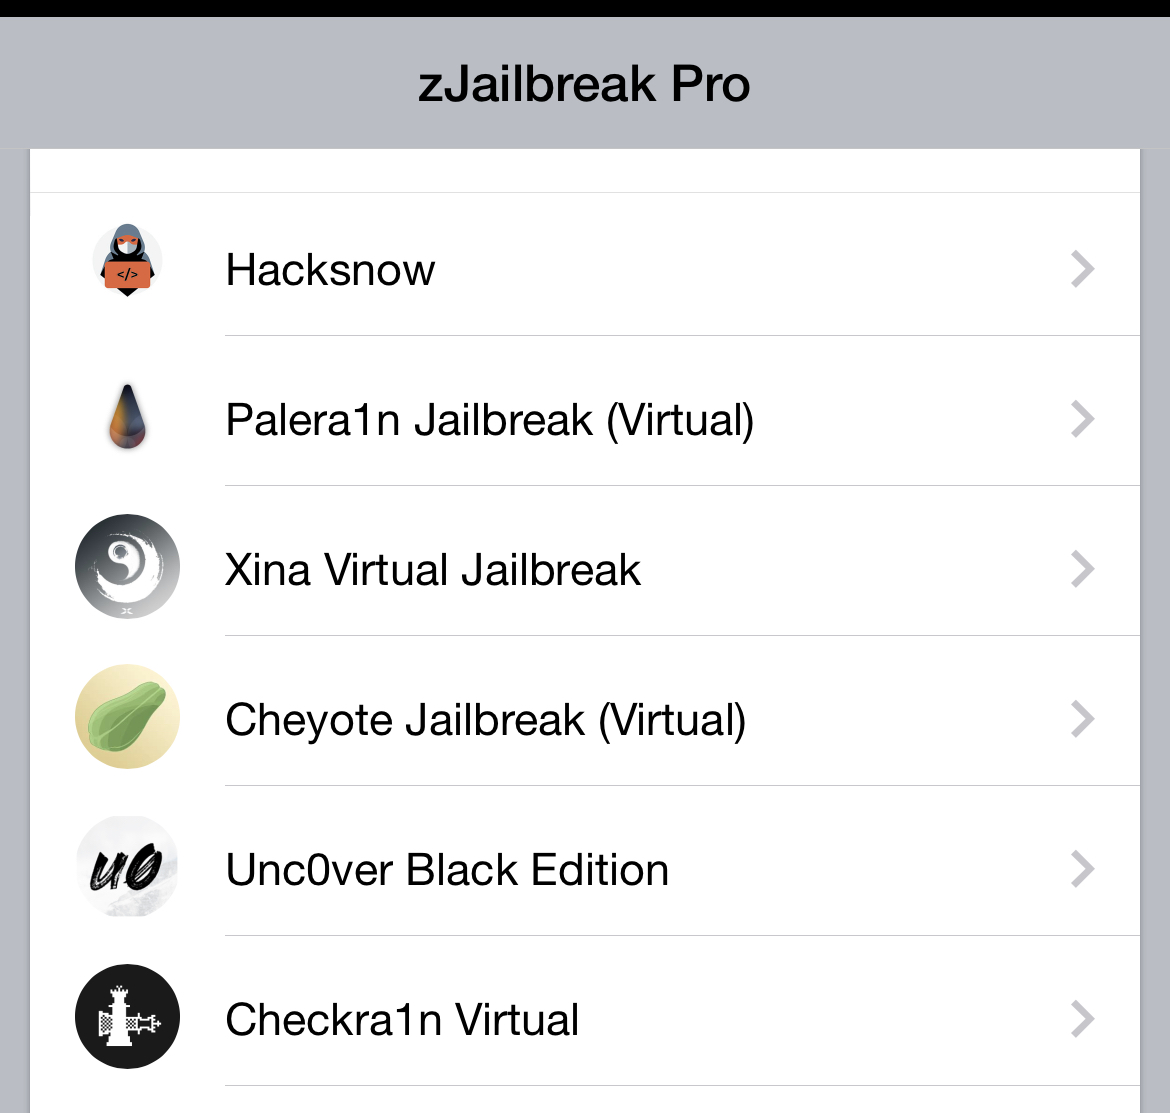 Palera1n virtual on zJailbreak